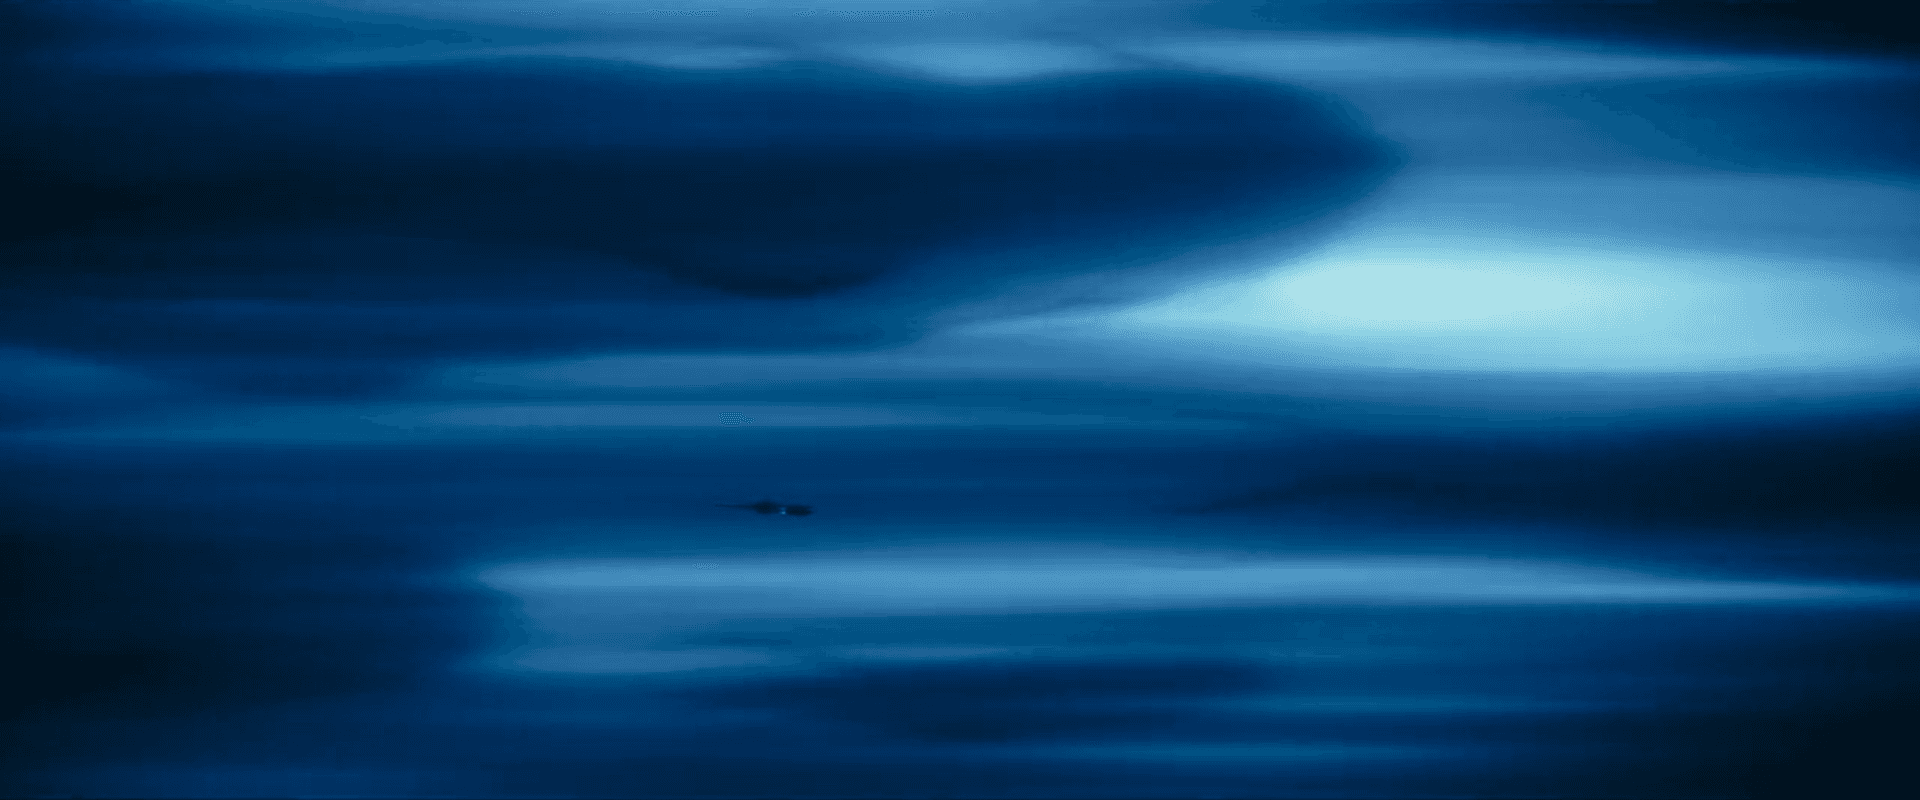 Whale, blue, desolation, sense of loneliness